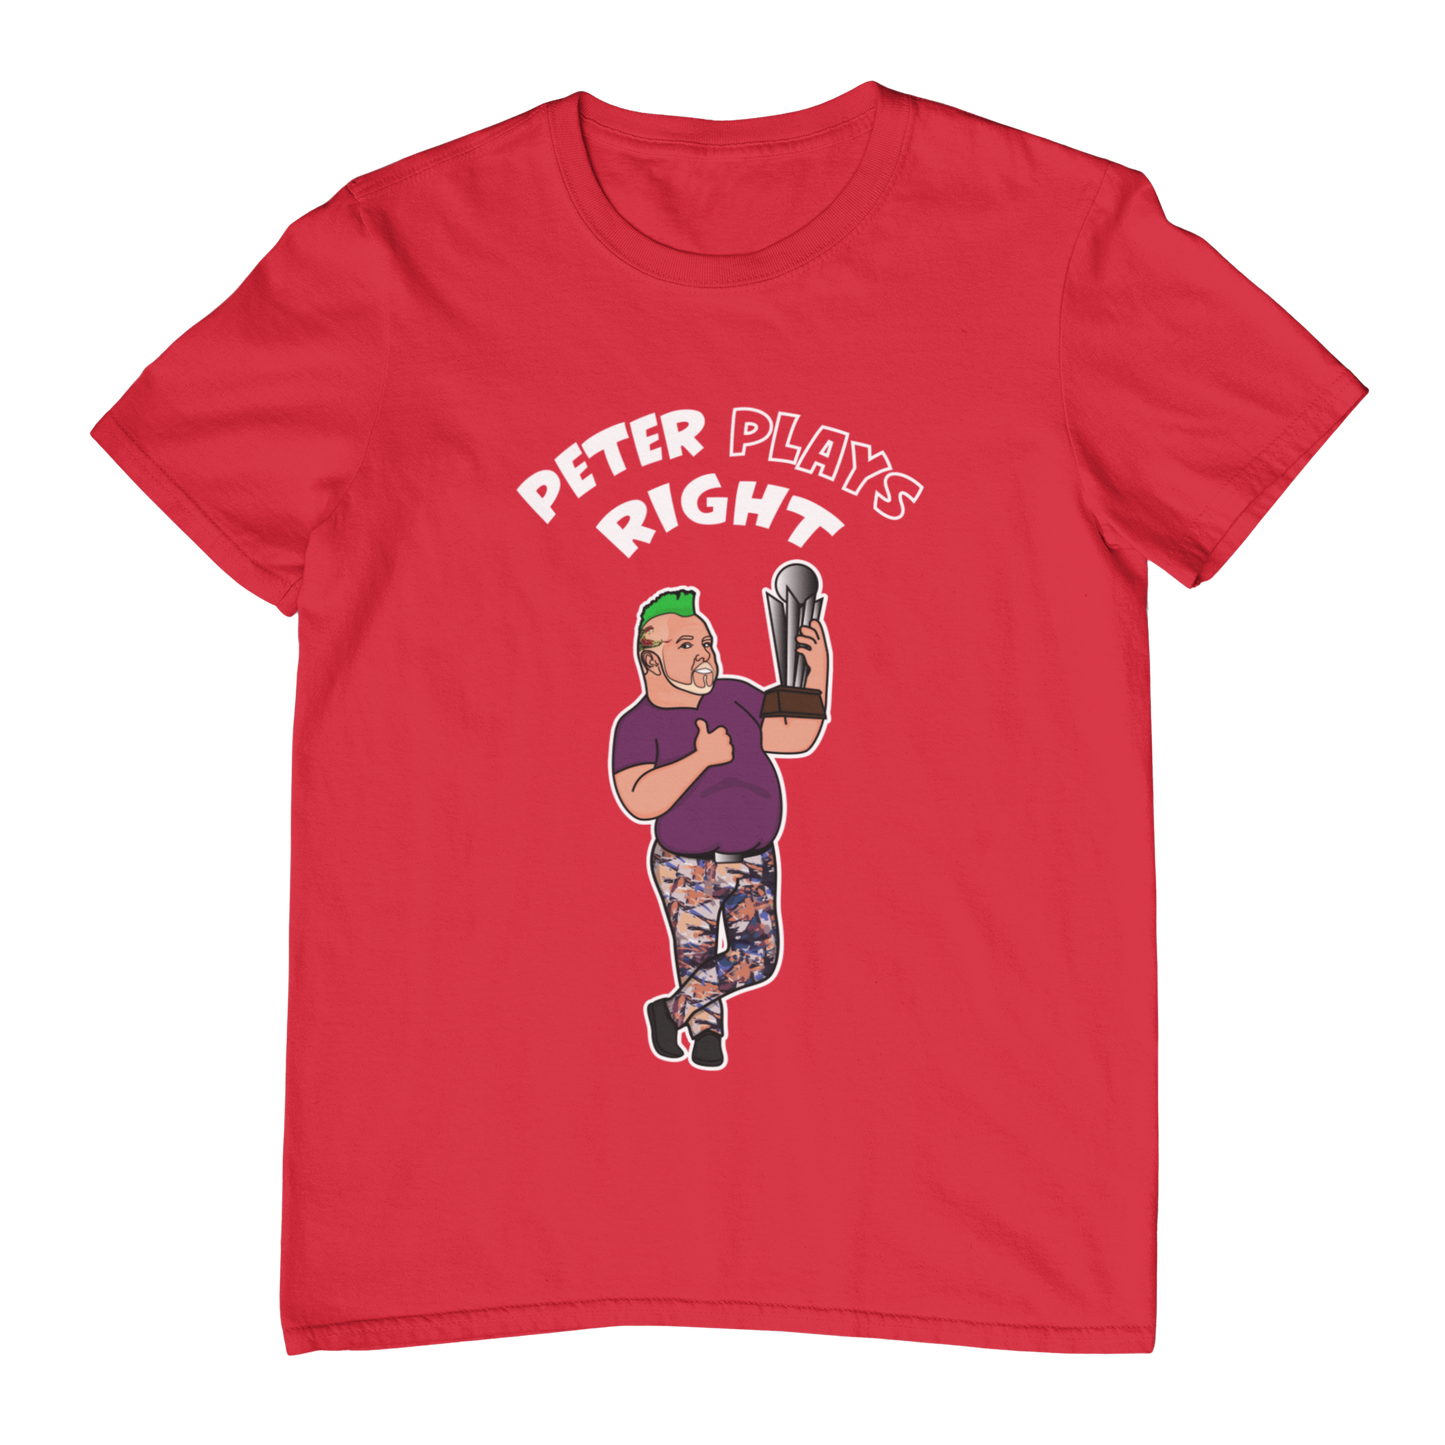 Peter Right - Shirt